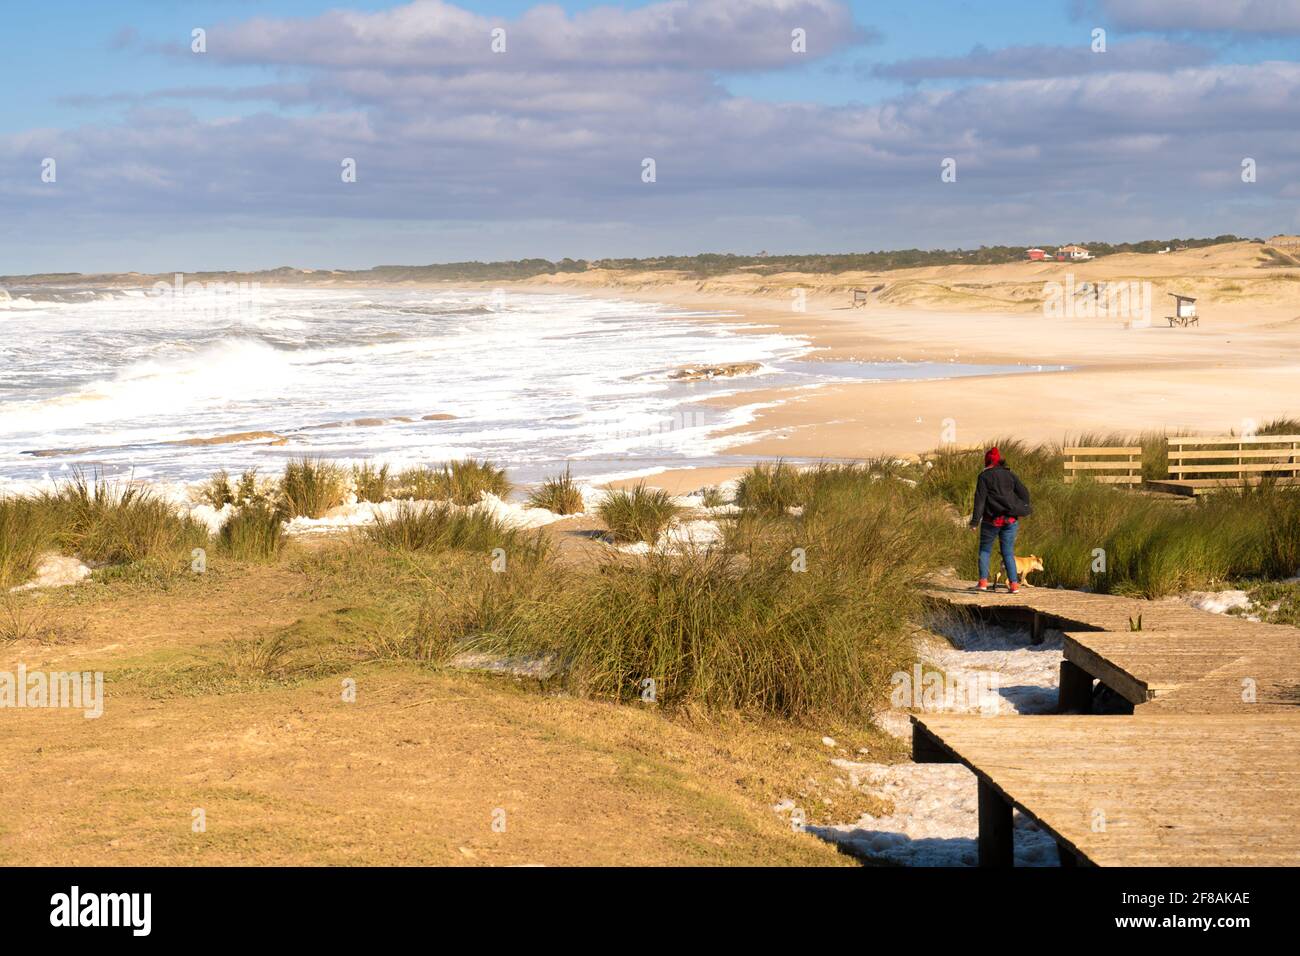 Nice coastline shot in Punta del diablo, Rocha, Uruguay Stock Photo